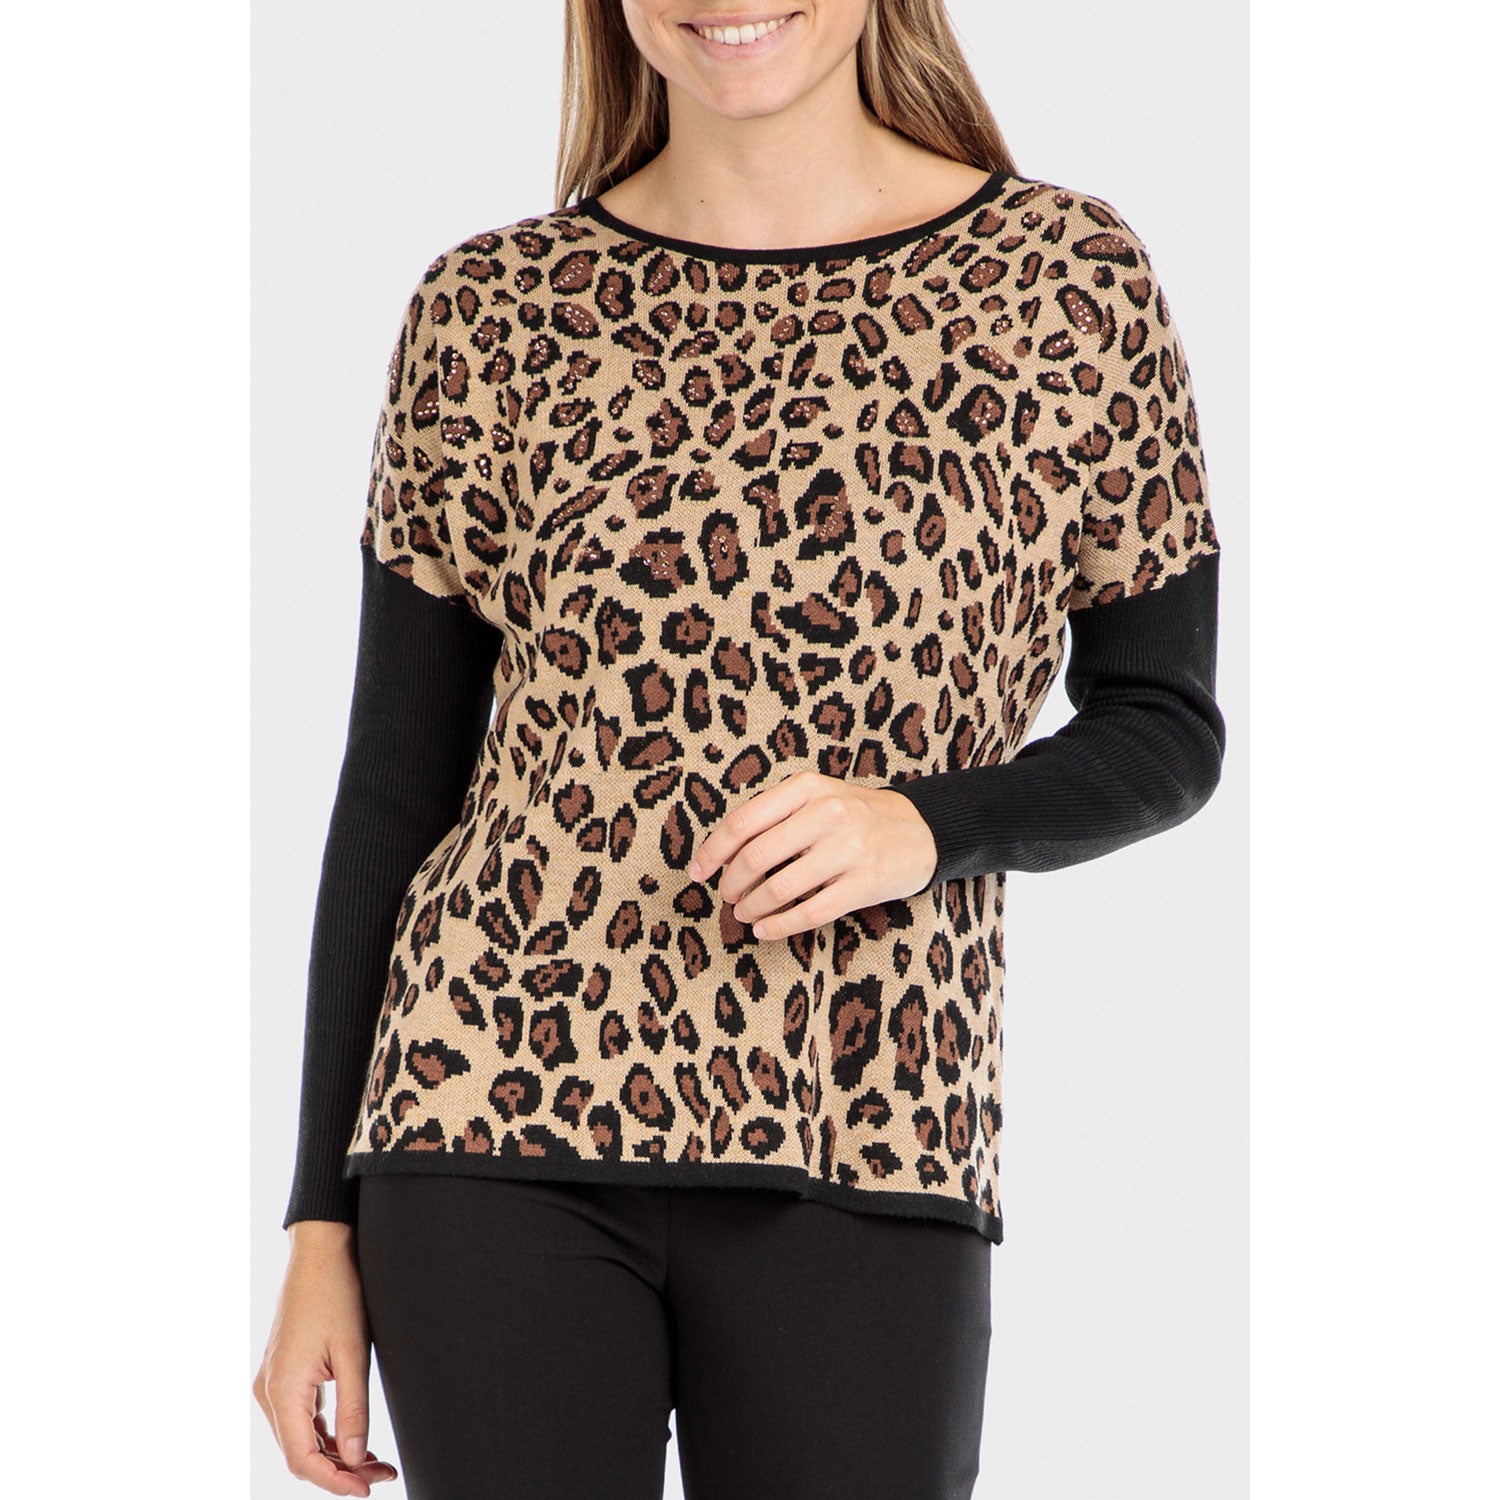 Punt Roma Animal Print Sweater - Black Sleeves 1 Shaws Department Stores